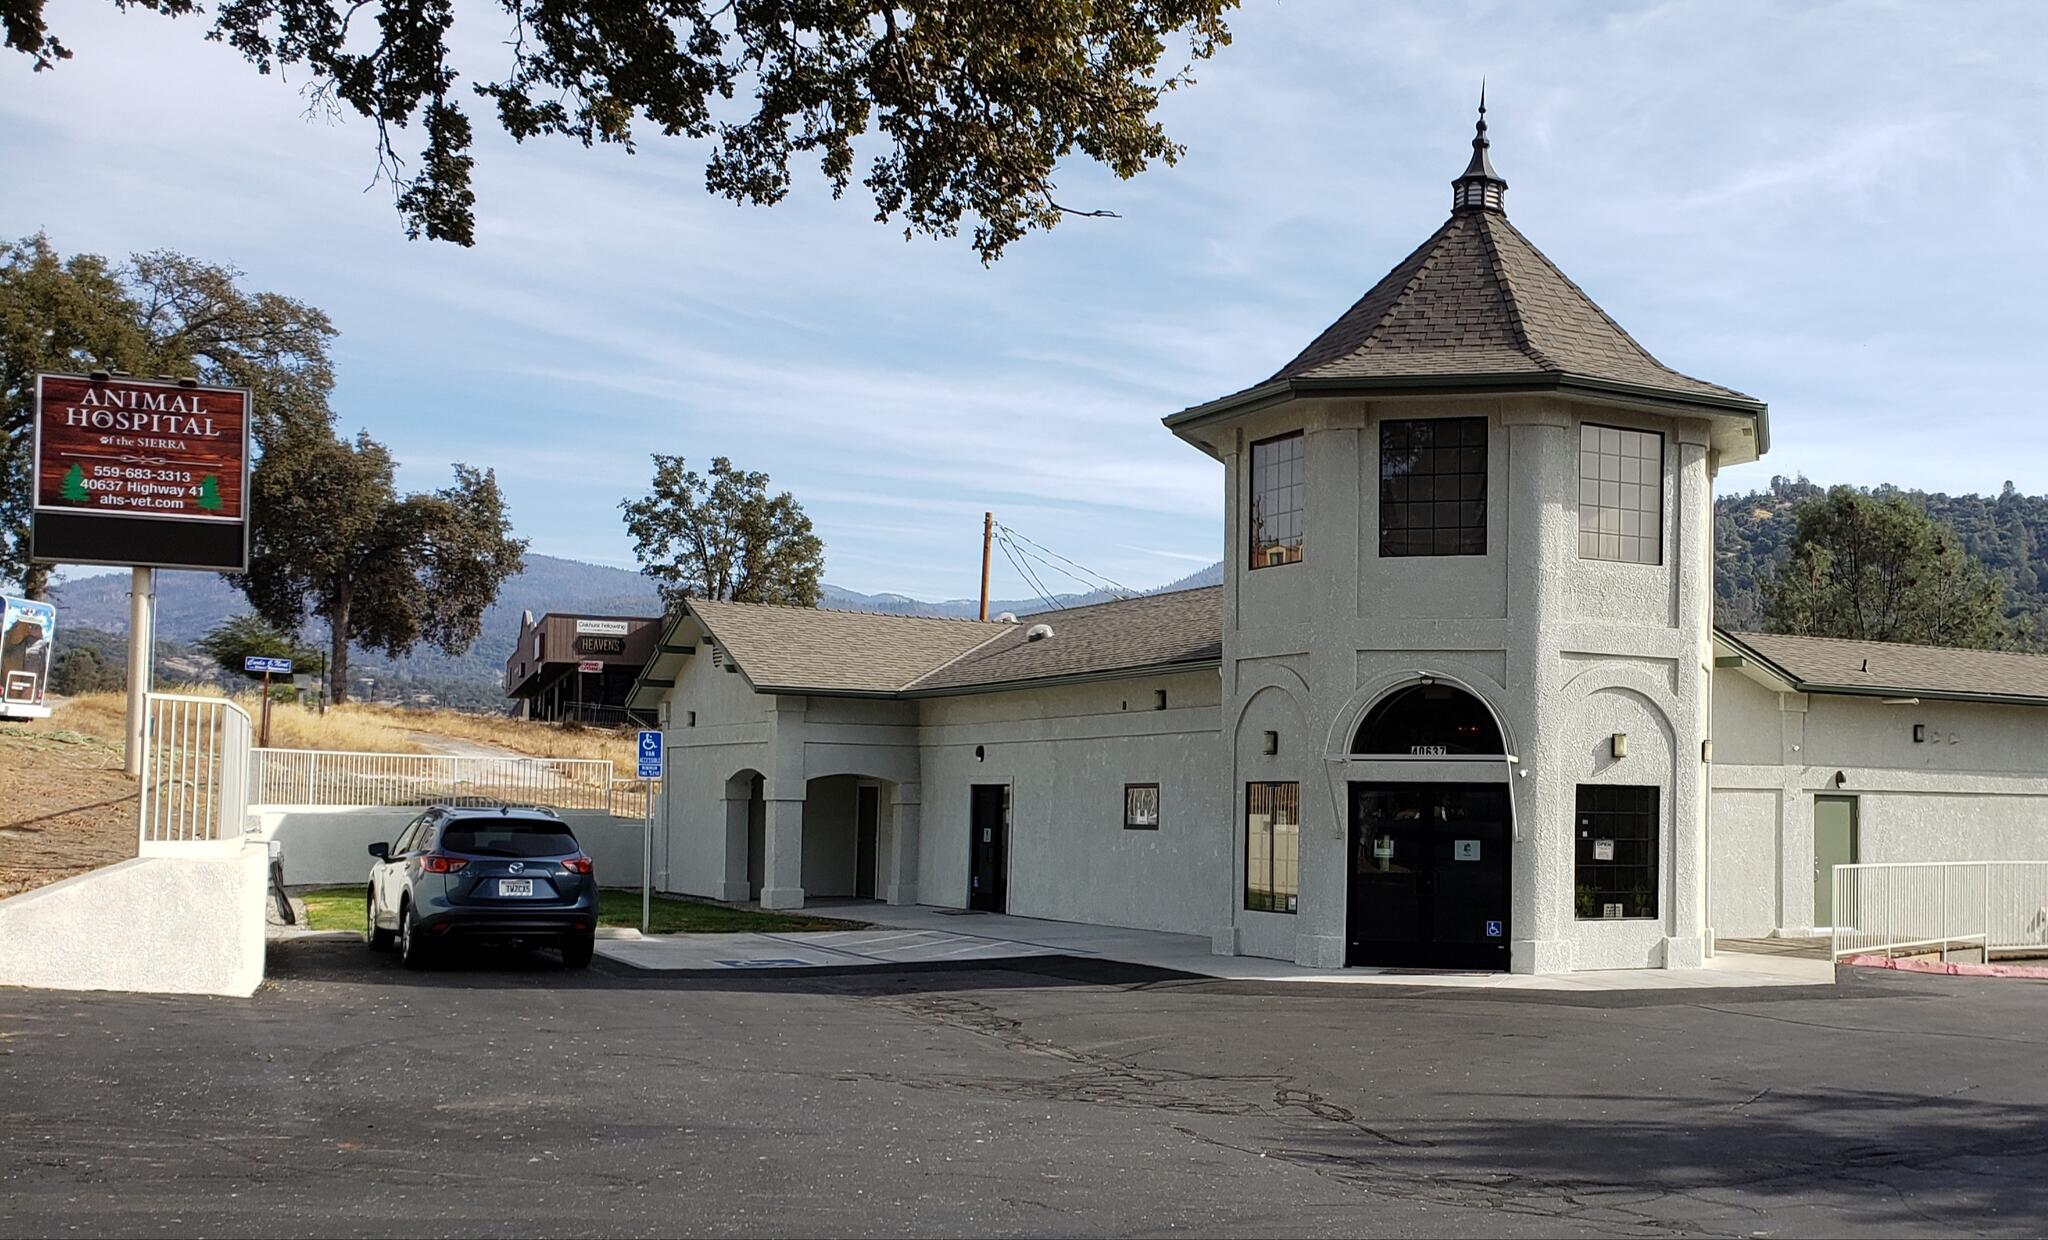 Animal Hospital of the Sierra - Oakhurst, CA - Nextdoor